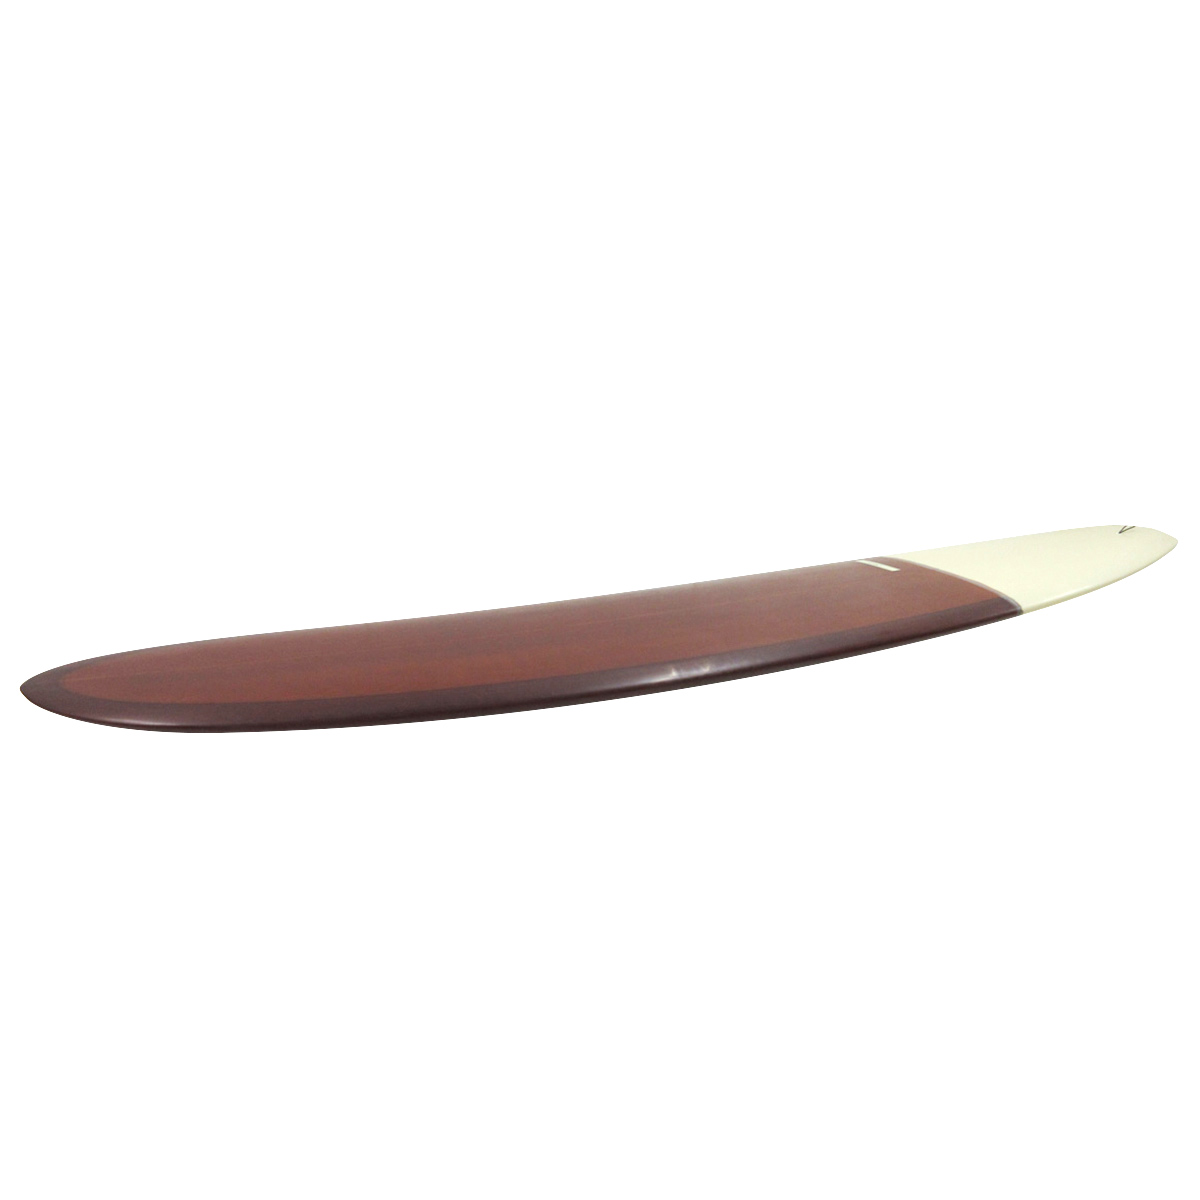 YU SURF CLASSIC / Cusotm Pig Noserider 9'4 